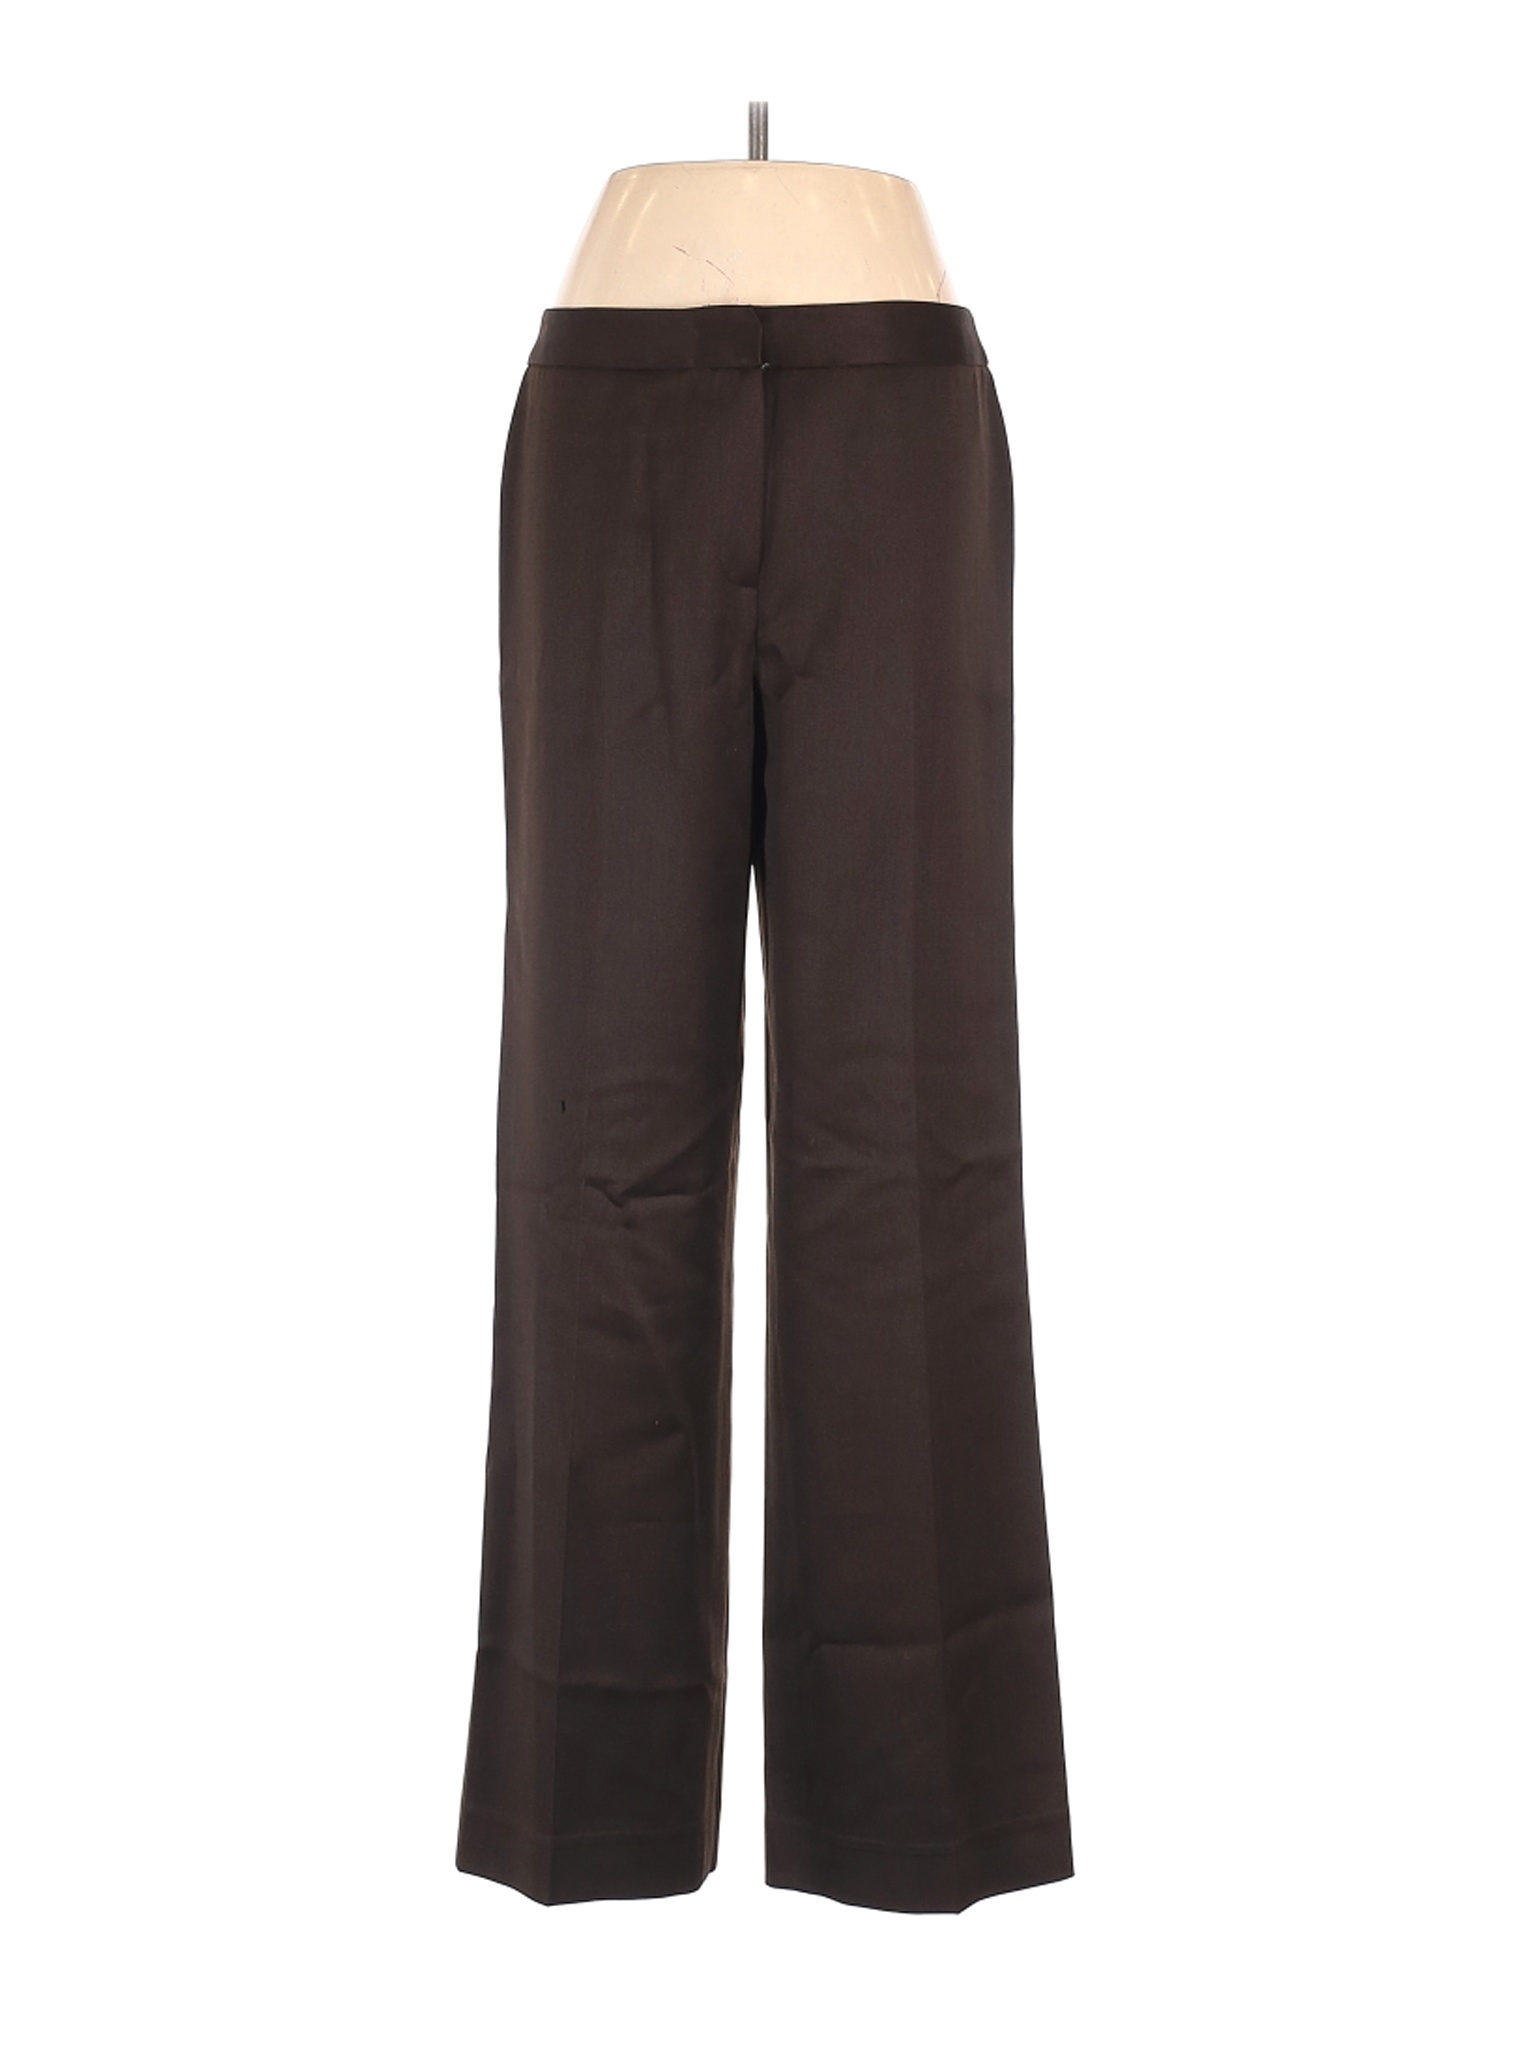 Lafayette 148 New York Women Brown Wool Pants 6 | eBay